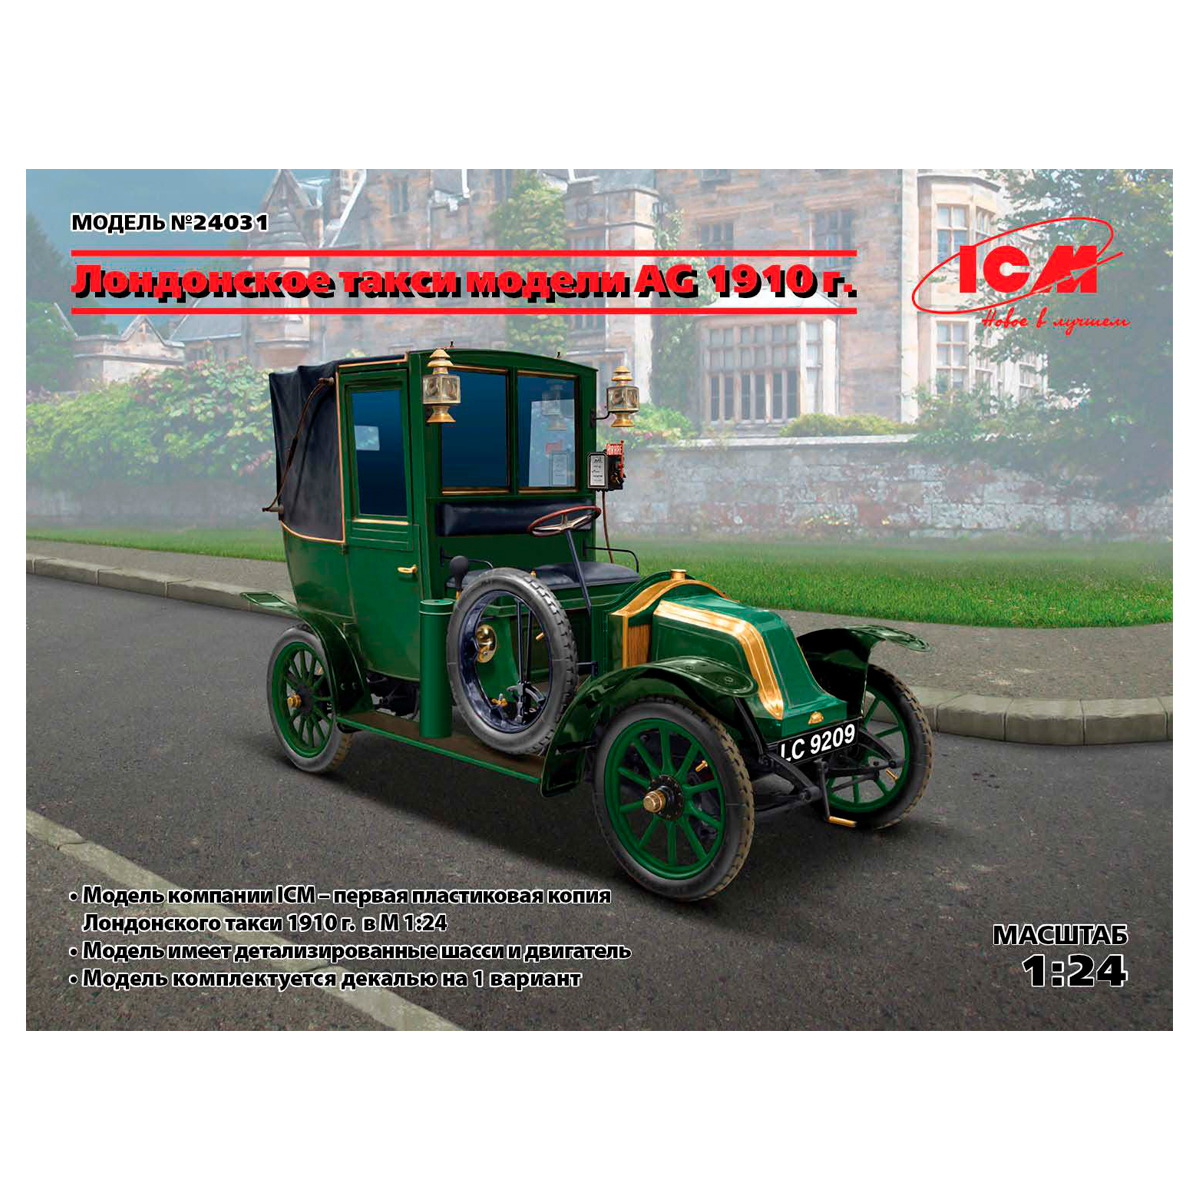 Type AG 1910 London Taxi 1/24